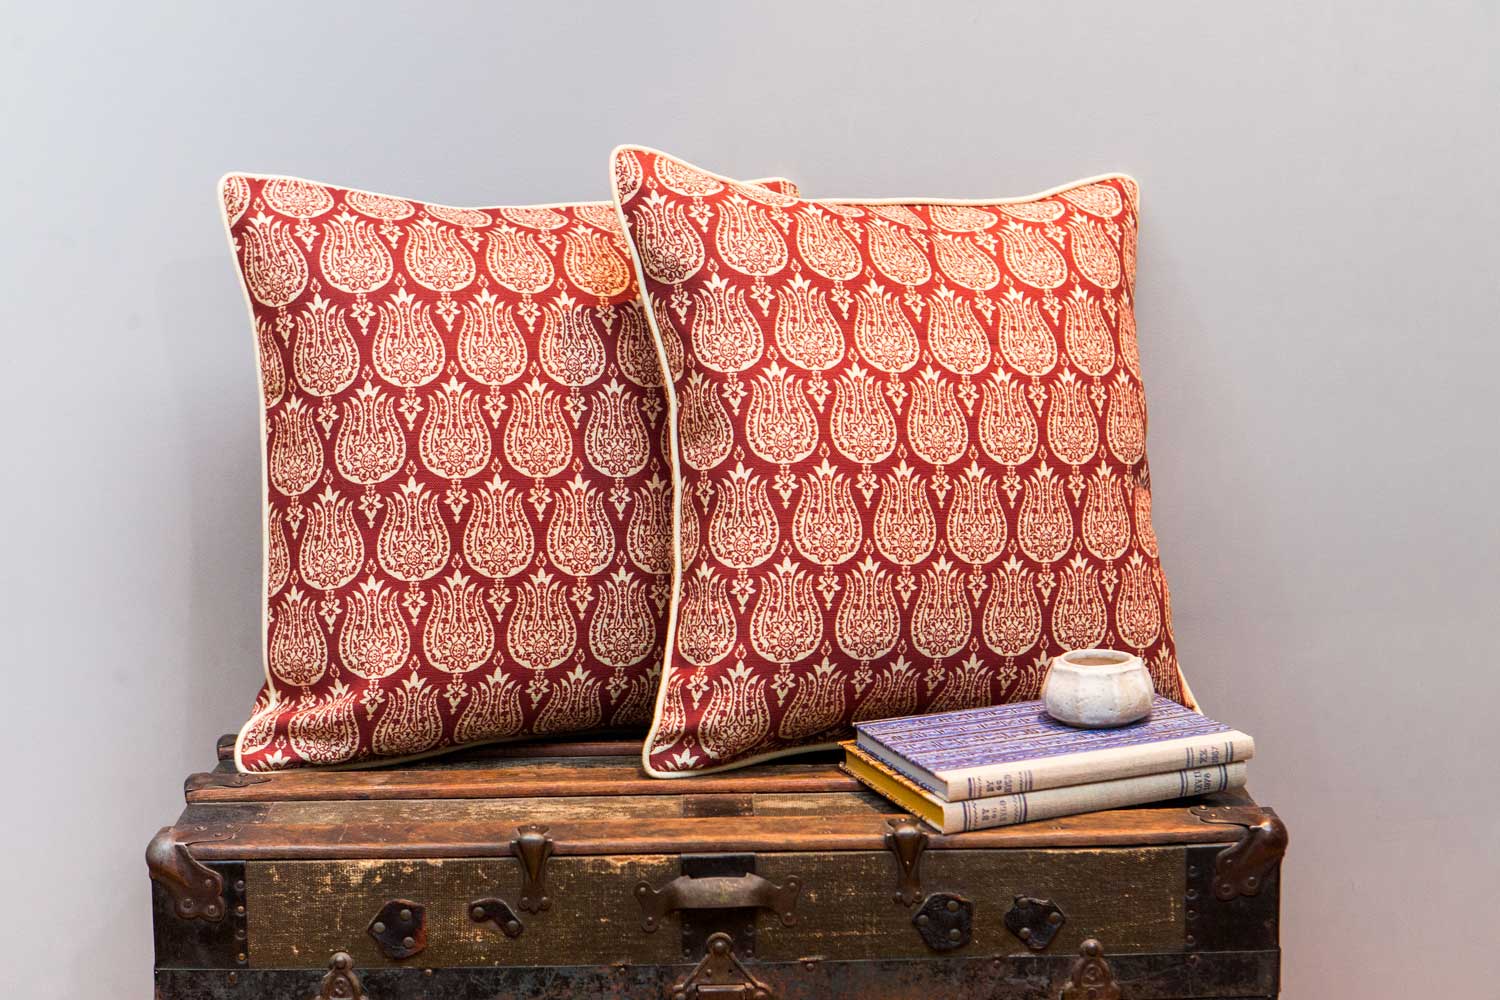 Abbot-Atlas-ottoman-tulip-red-fabric-linen-printed-pillow-cushion-trunk.jpg